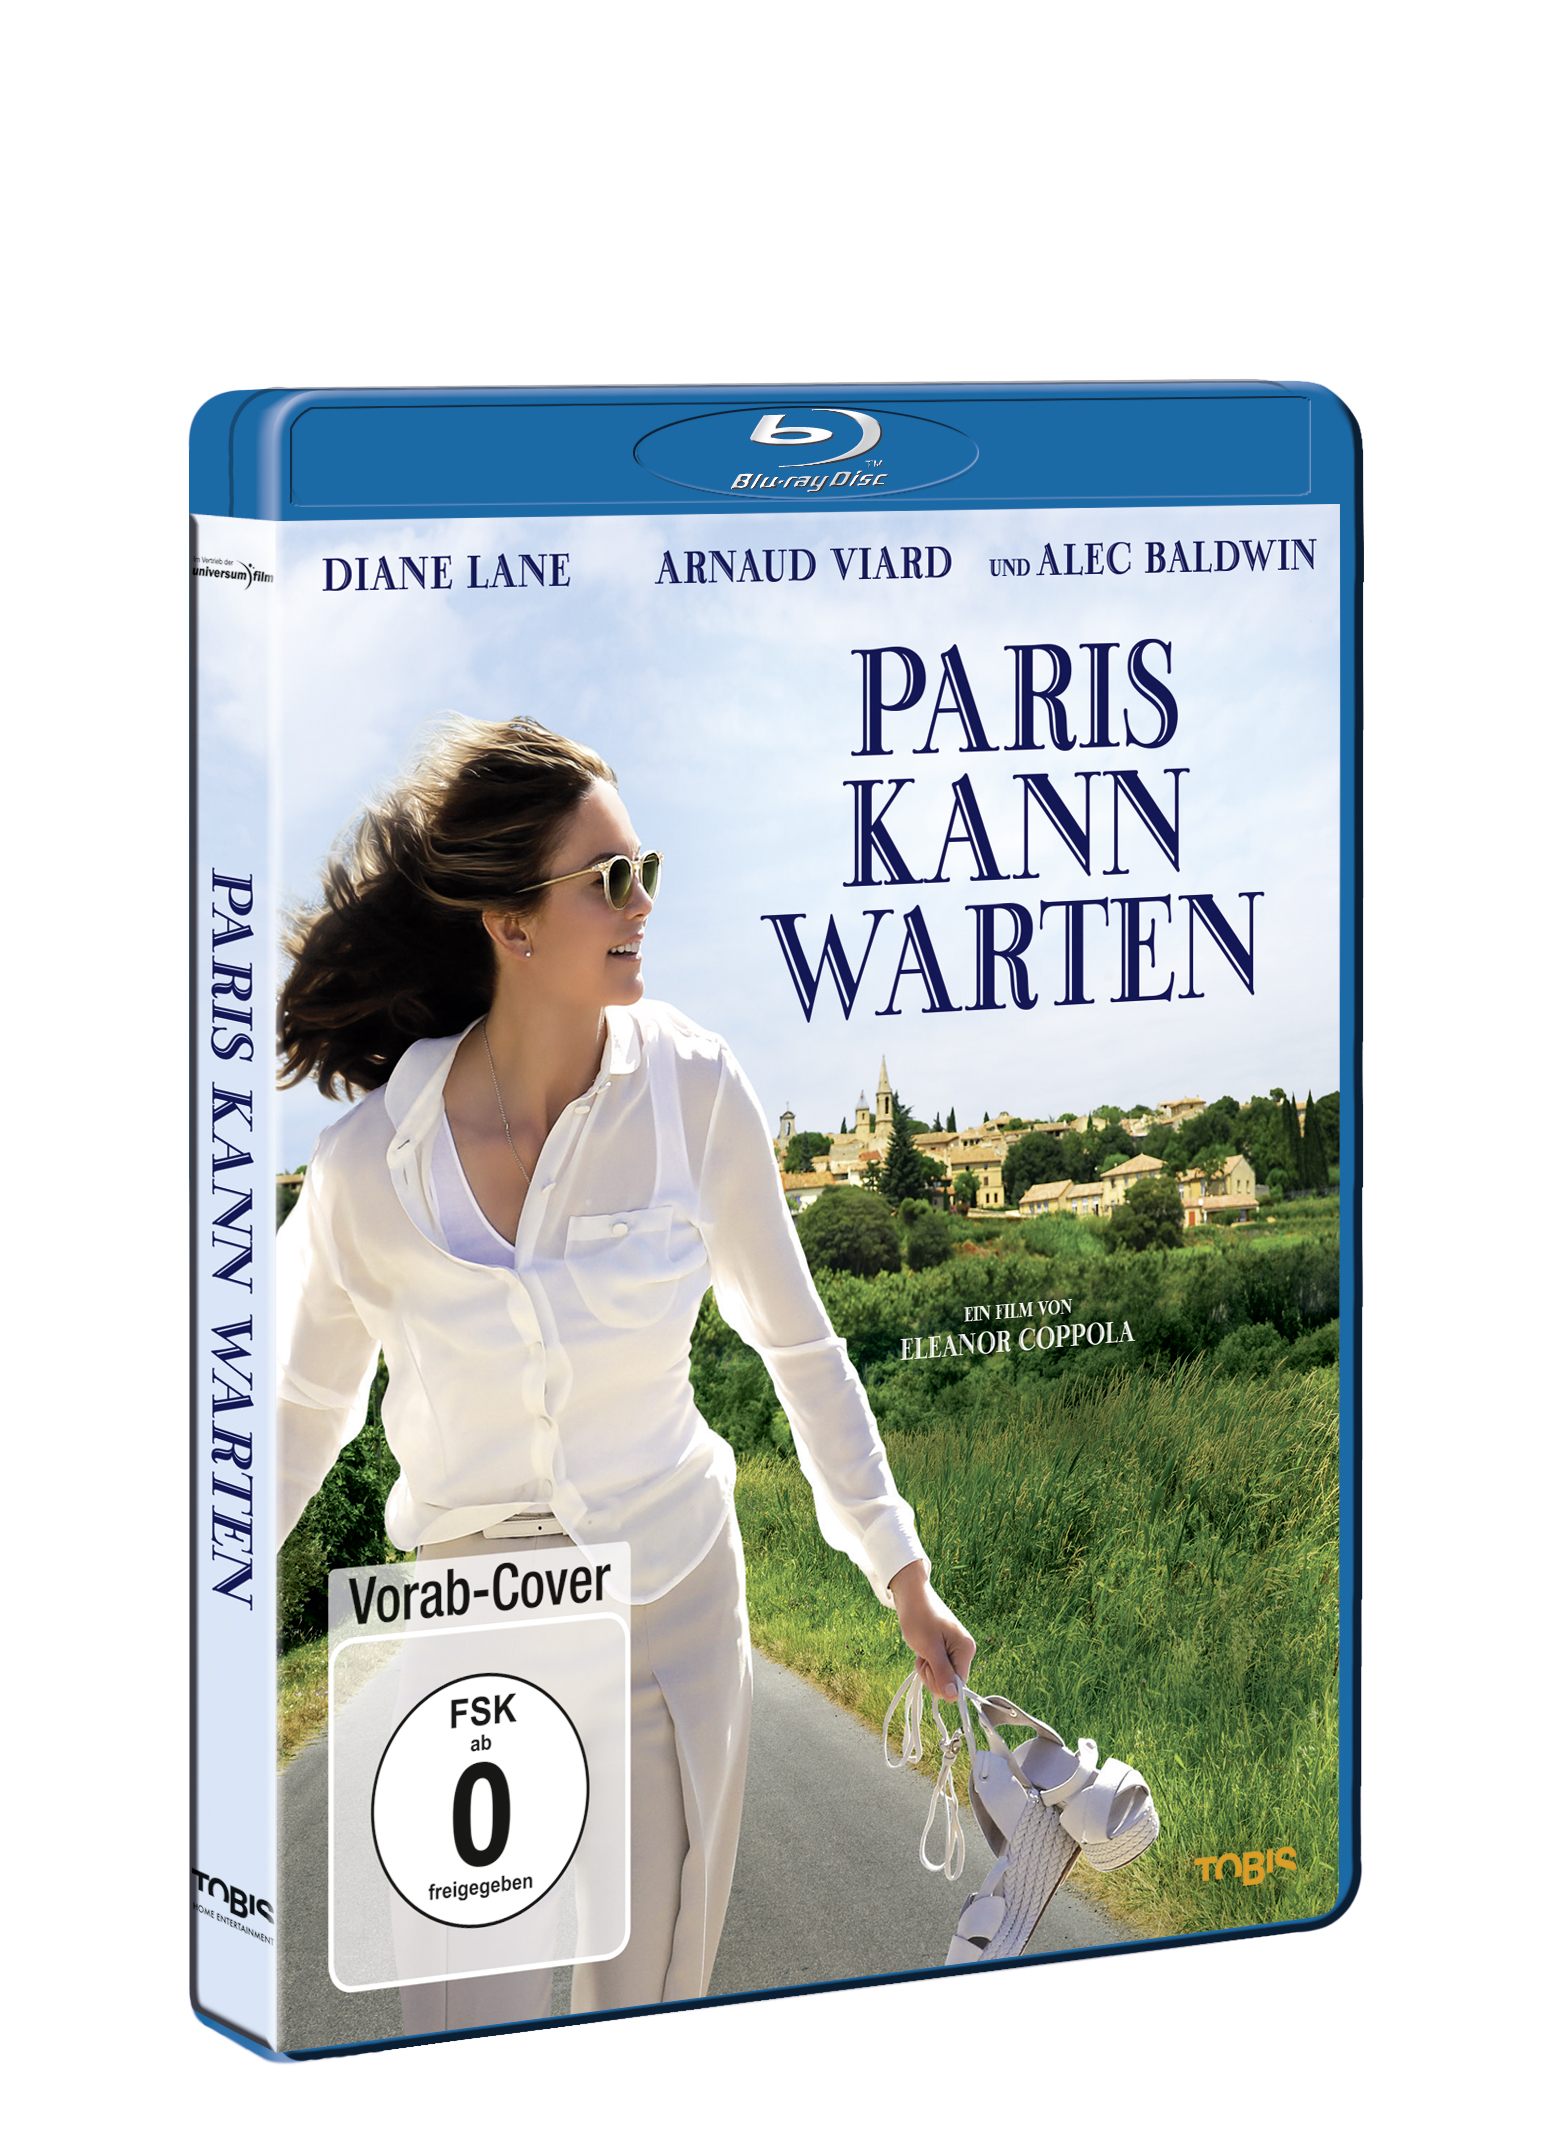 Blu-ray Paris warten kann